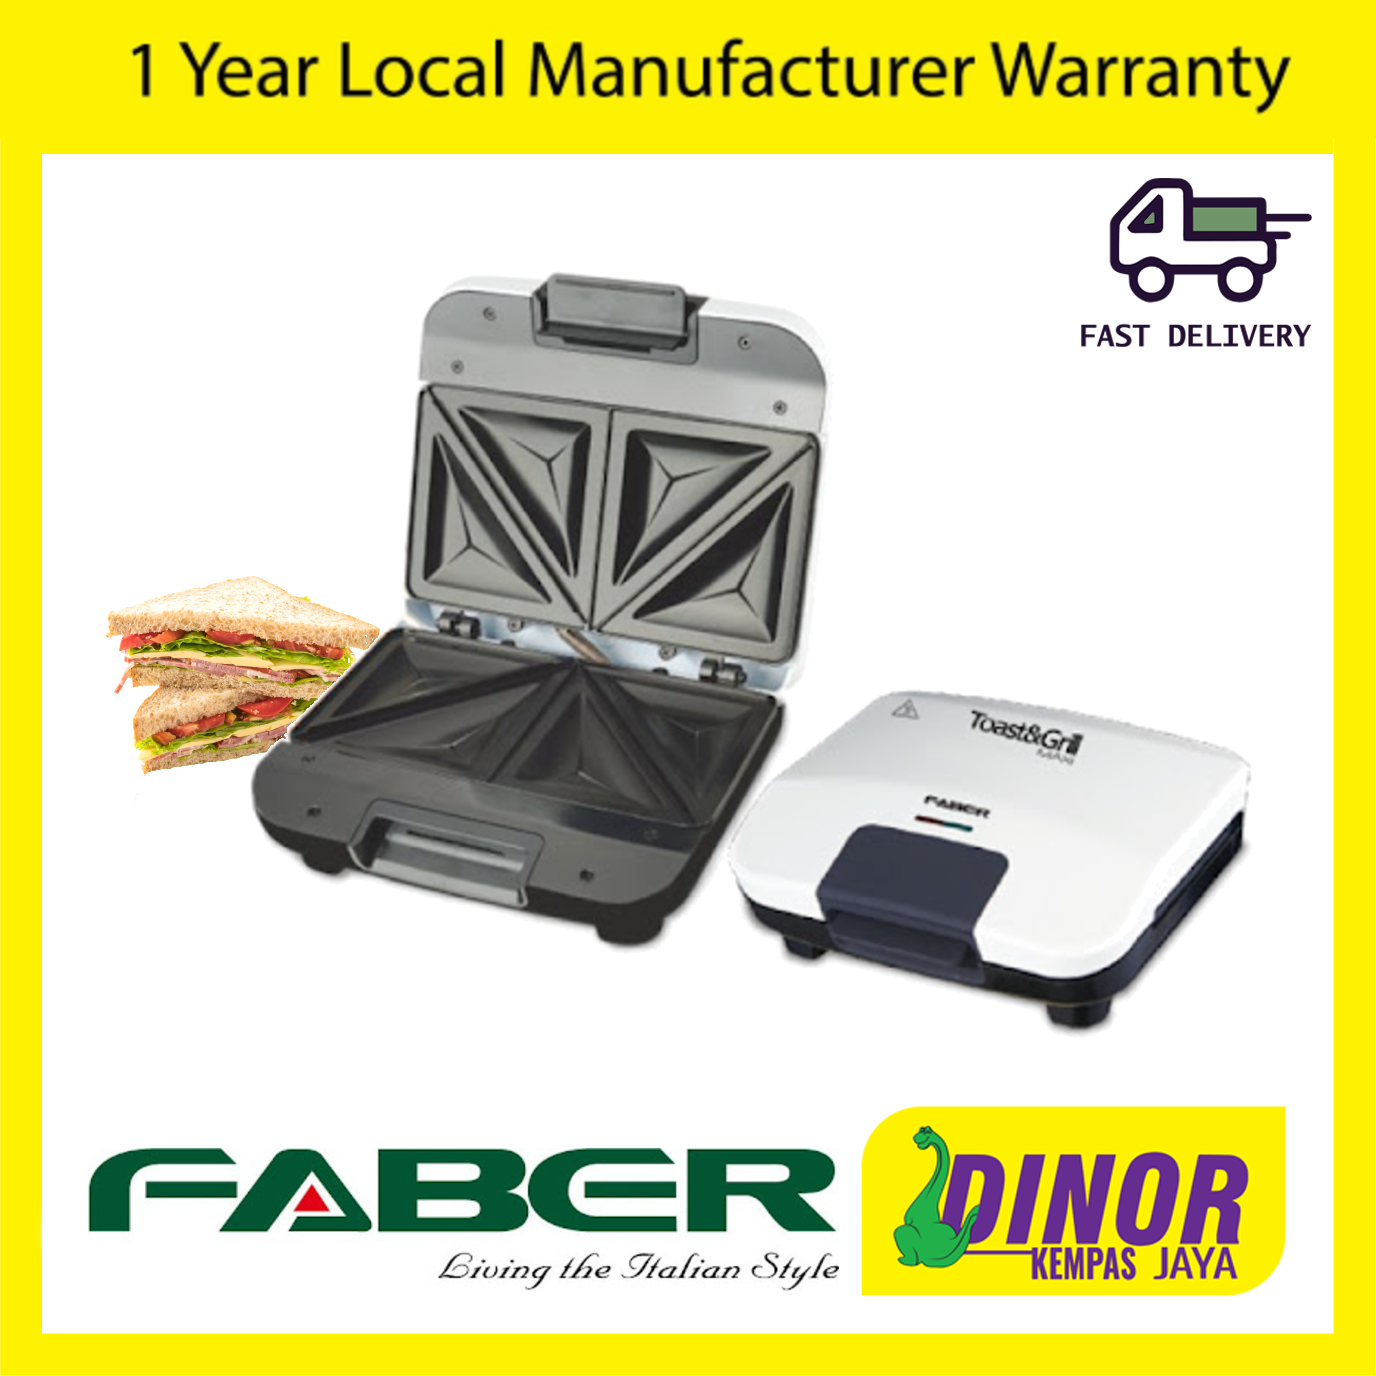 Faber Toast & Grill Sandwich Maker EASY-FSM-610 EASY FSM 610